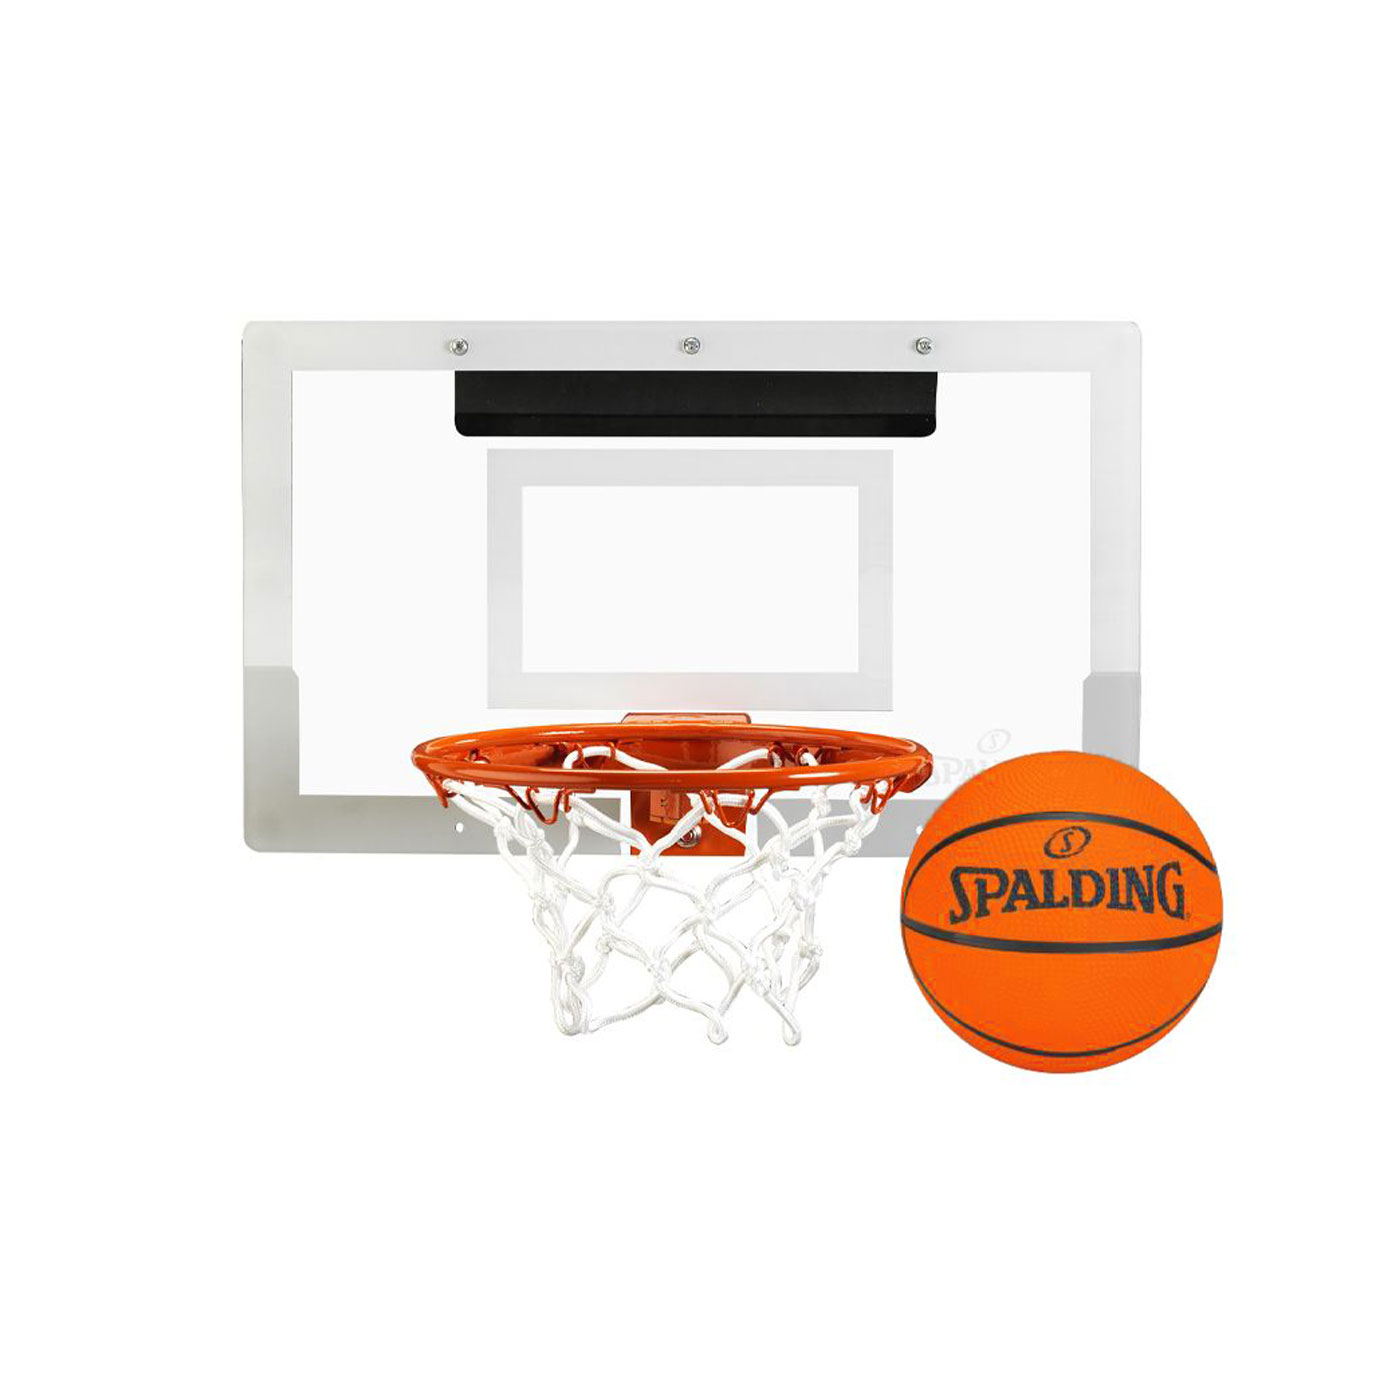 SPALDING 室內小籃板(含小球) SPB561030 - 依賣場